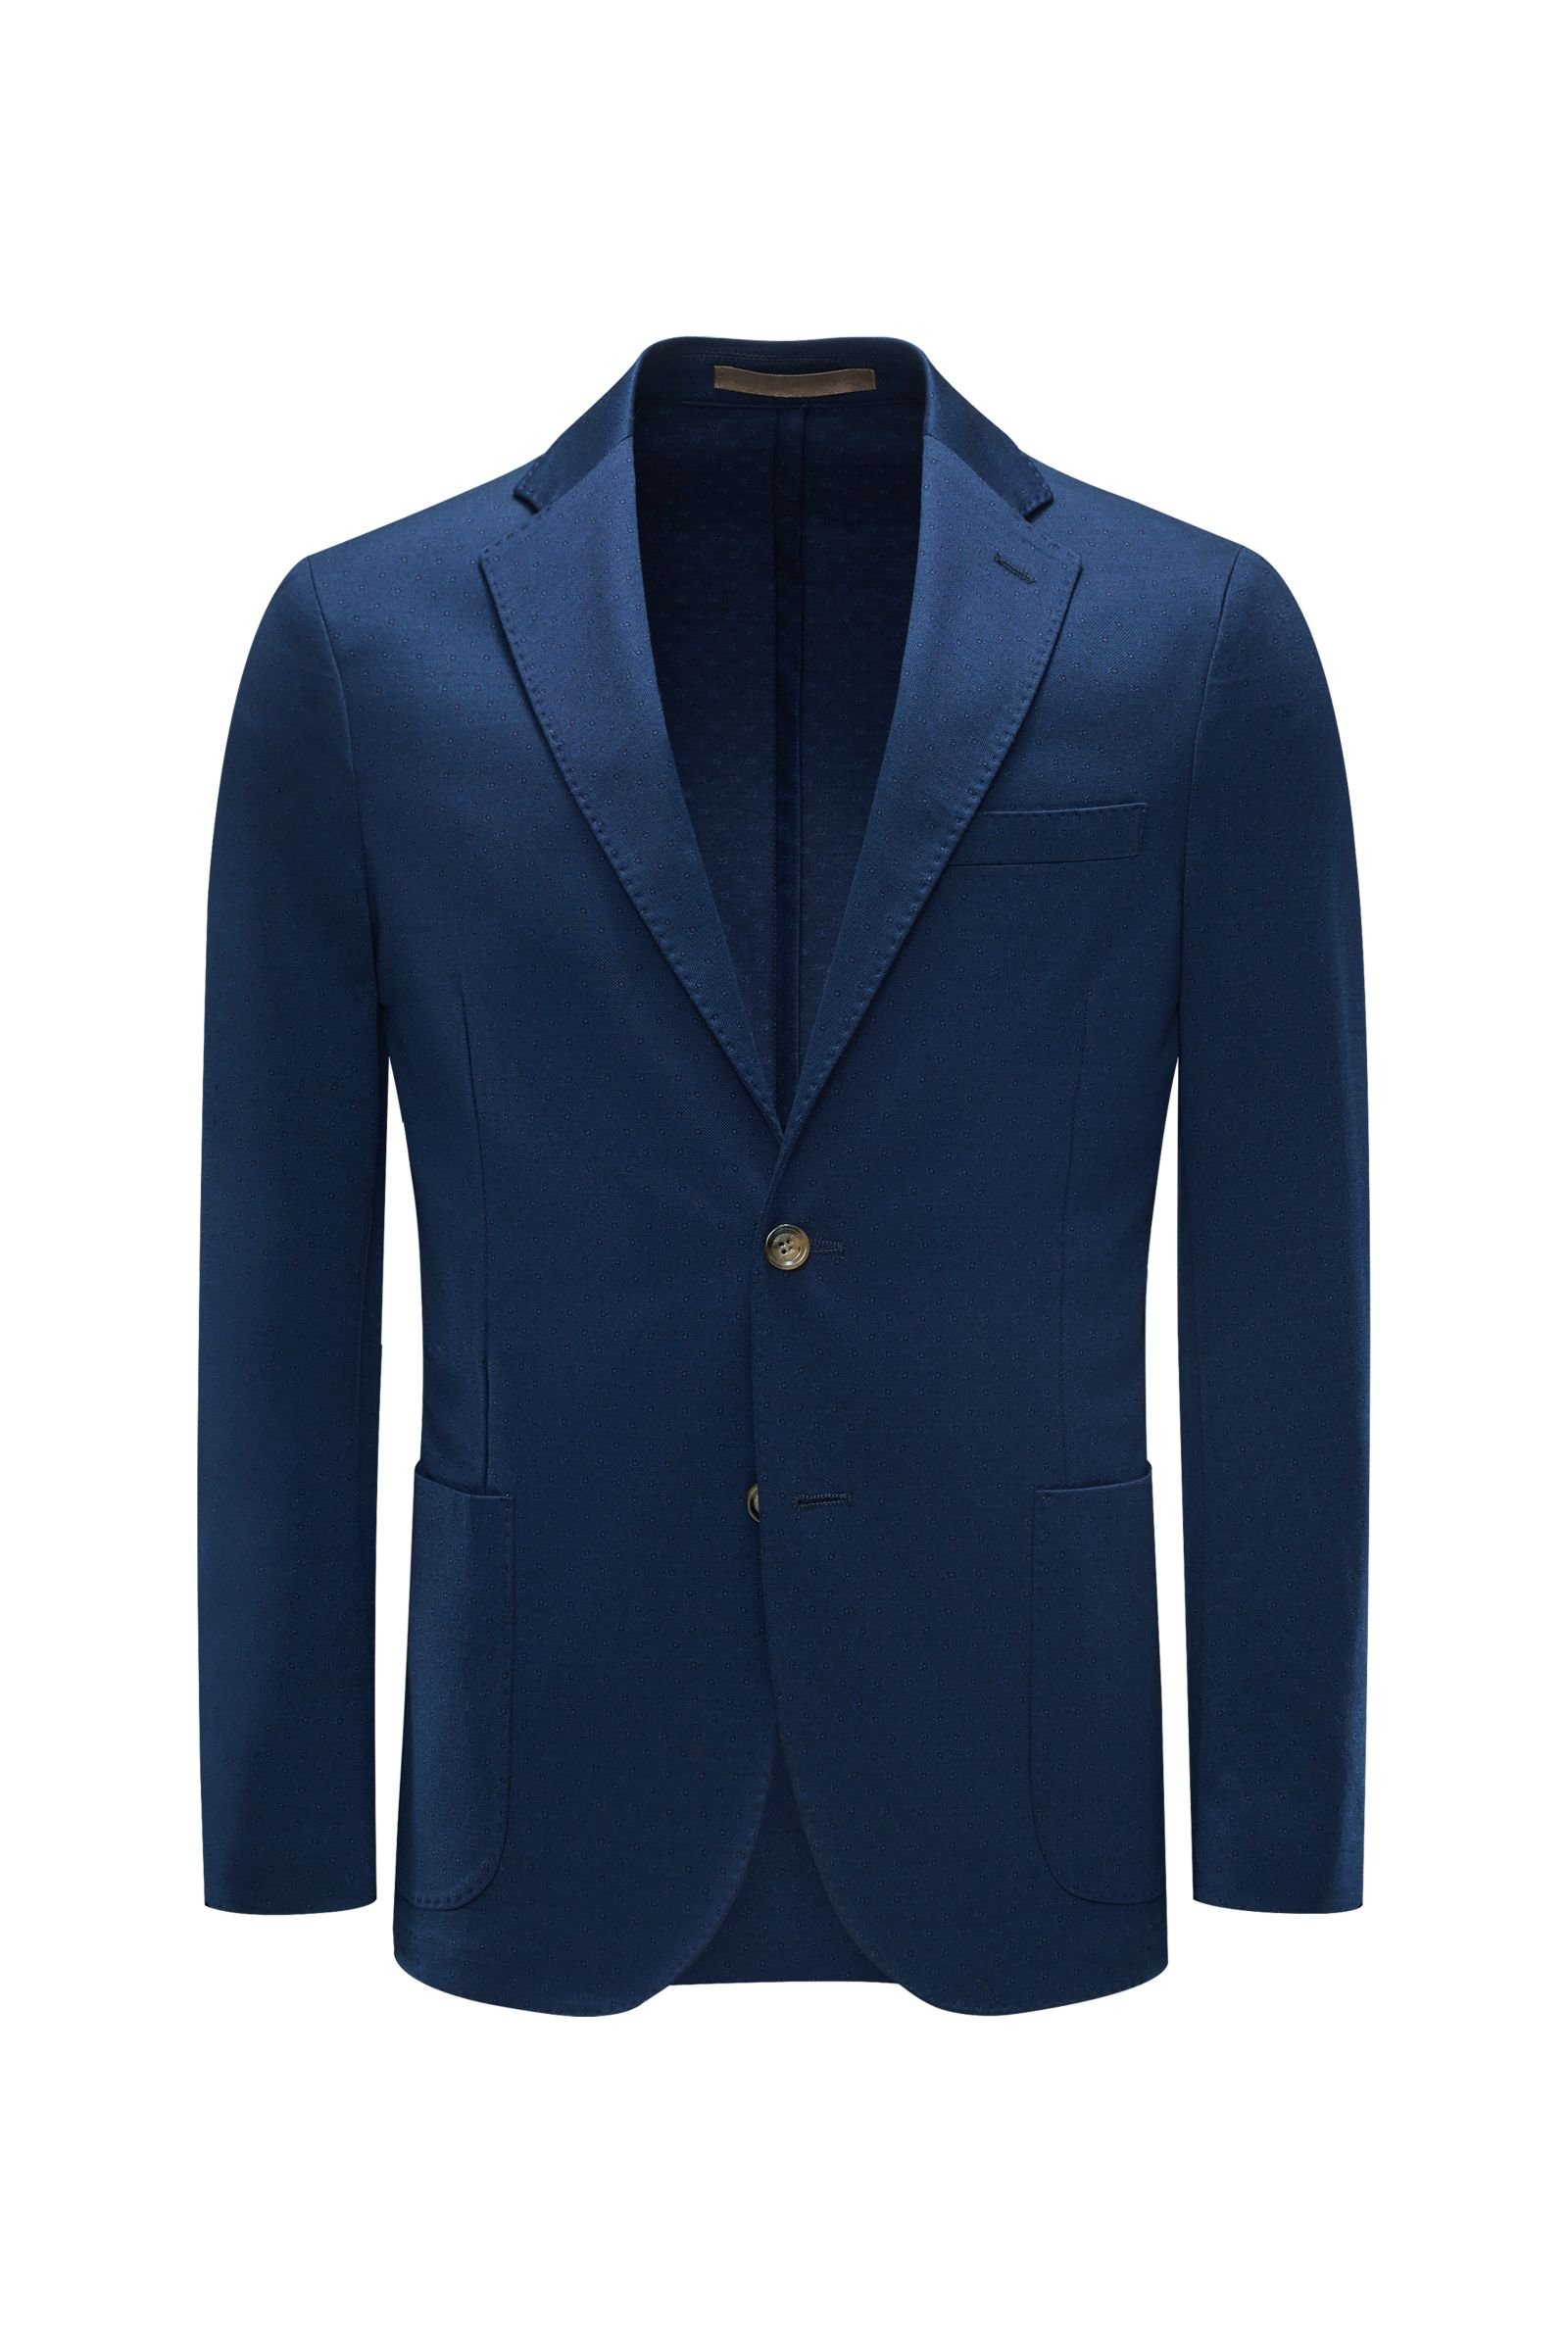 Jersey jacket dark blue patterned